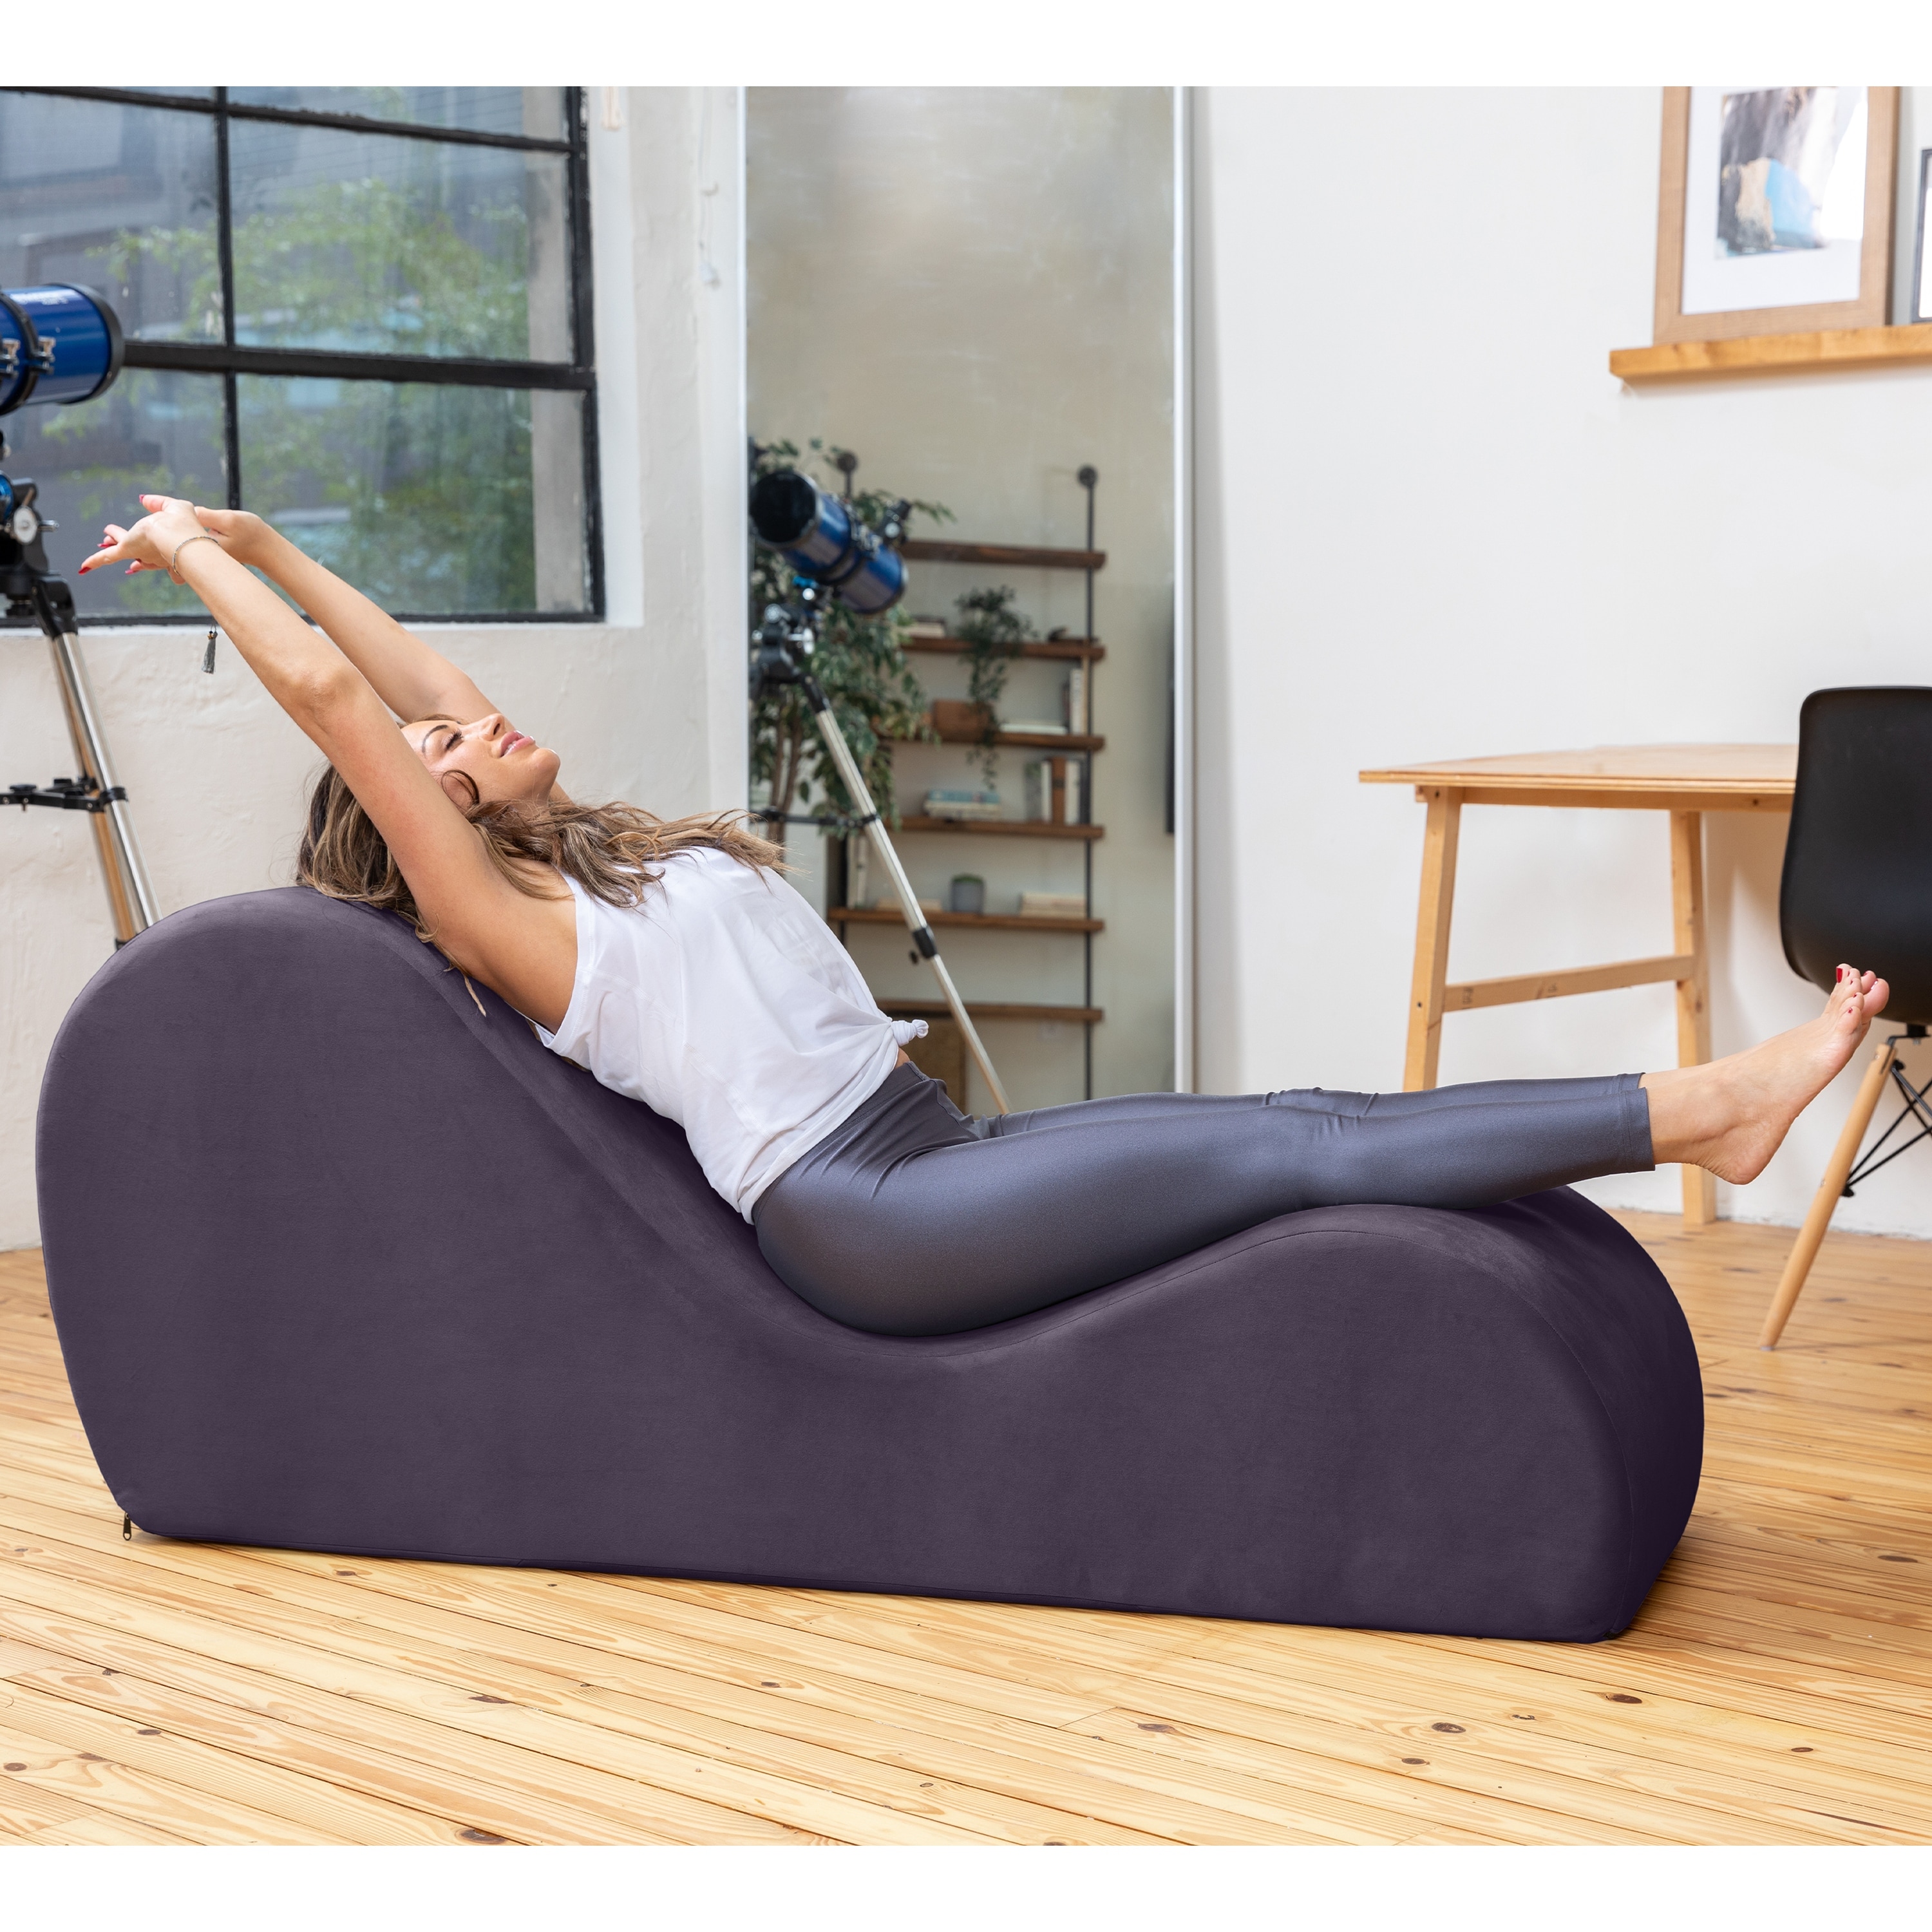 Avana Yoga Chaise Lounge Chair - On Sale - Bed Bath & Beyond